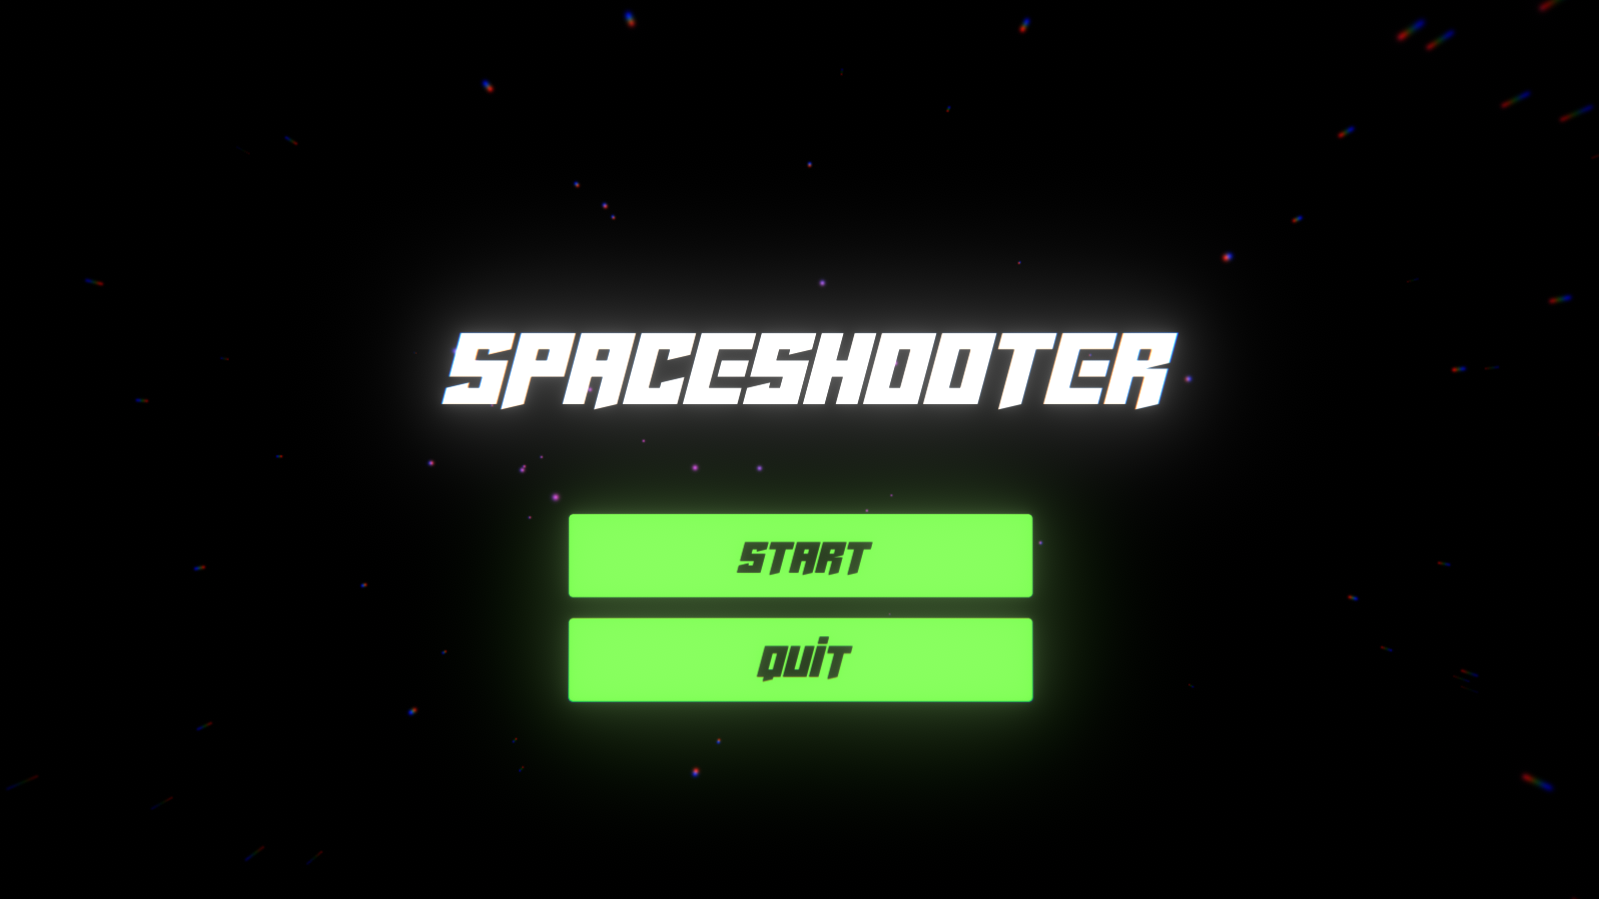 Spaceshooter